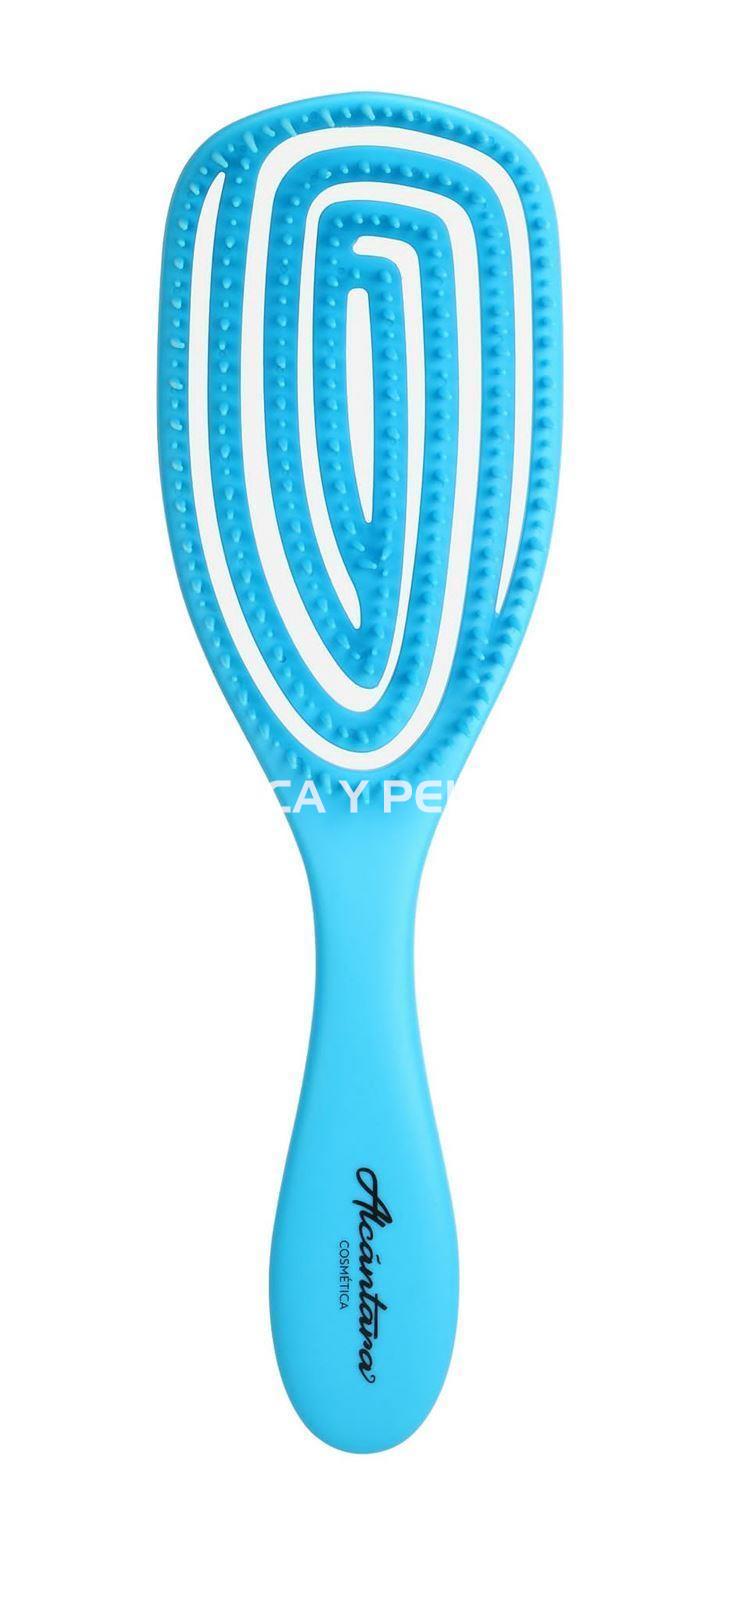 Cepillo Maze Luxury azul - Imagen 1